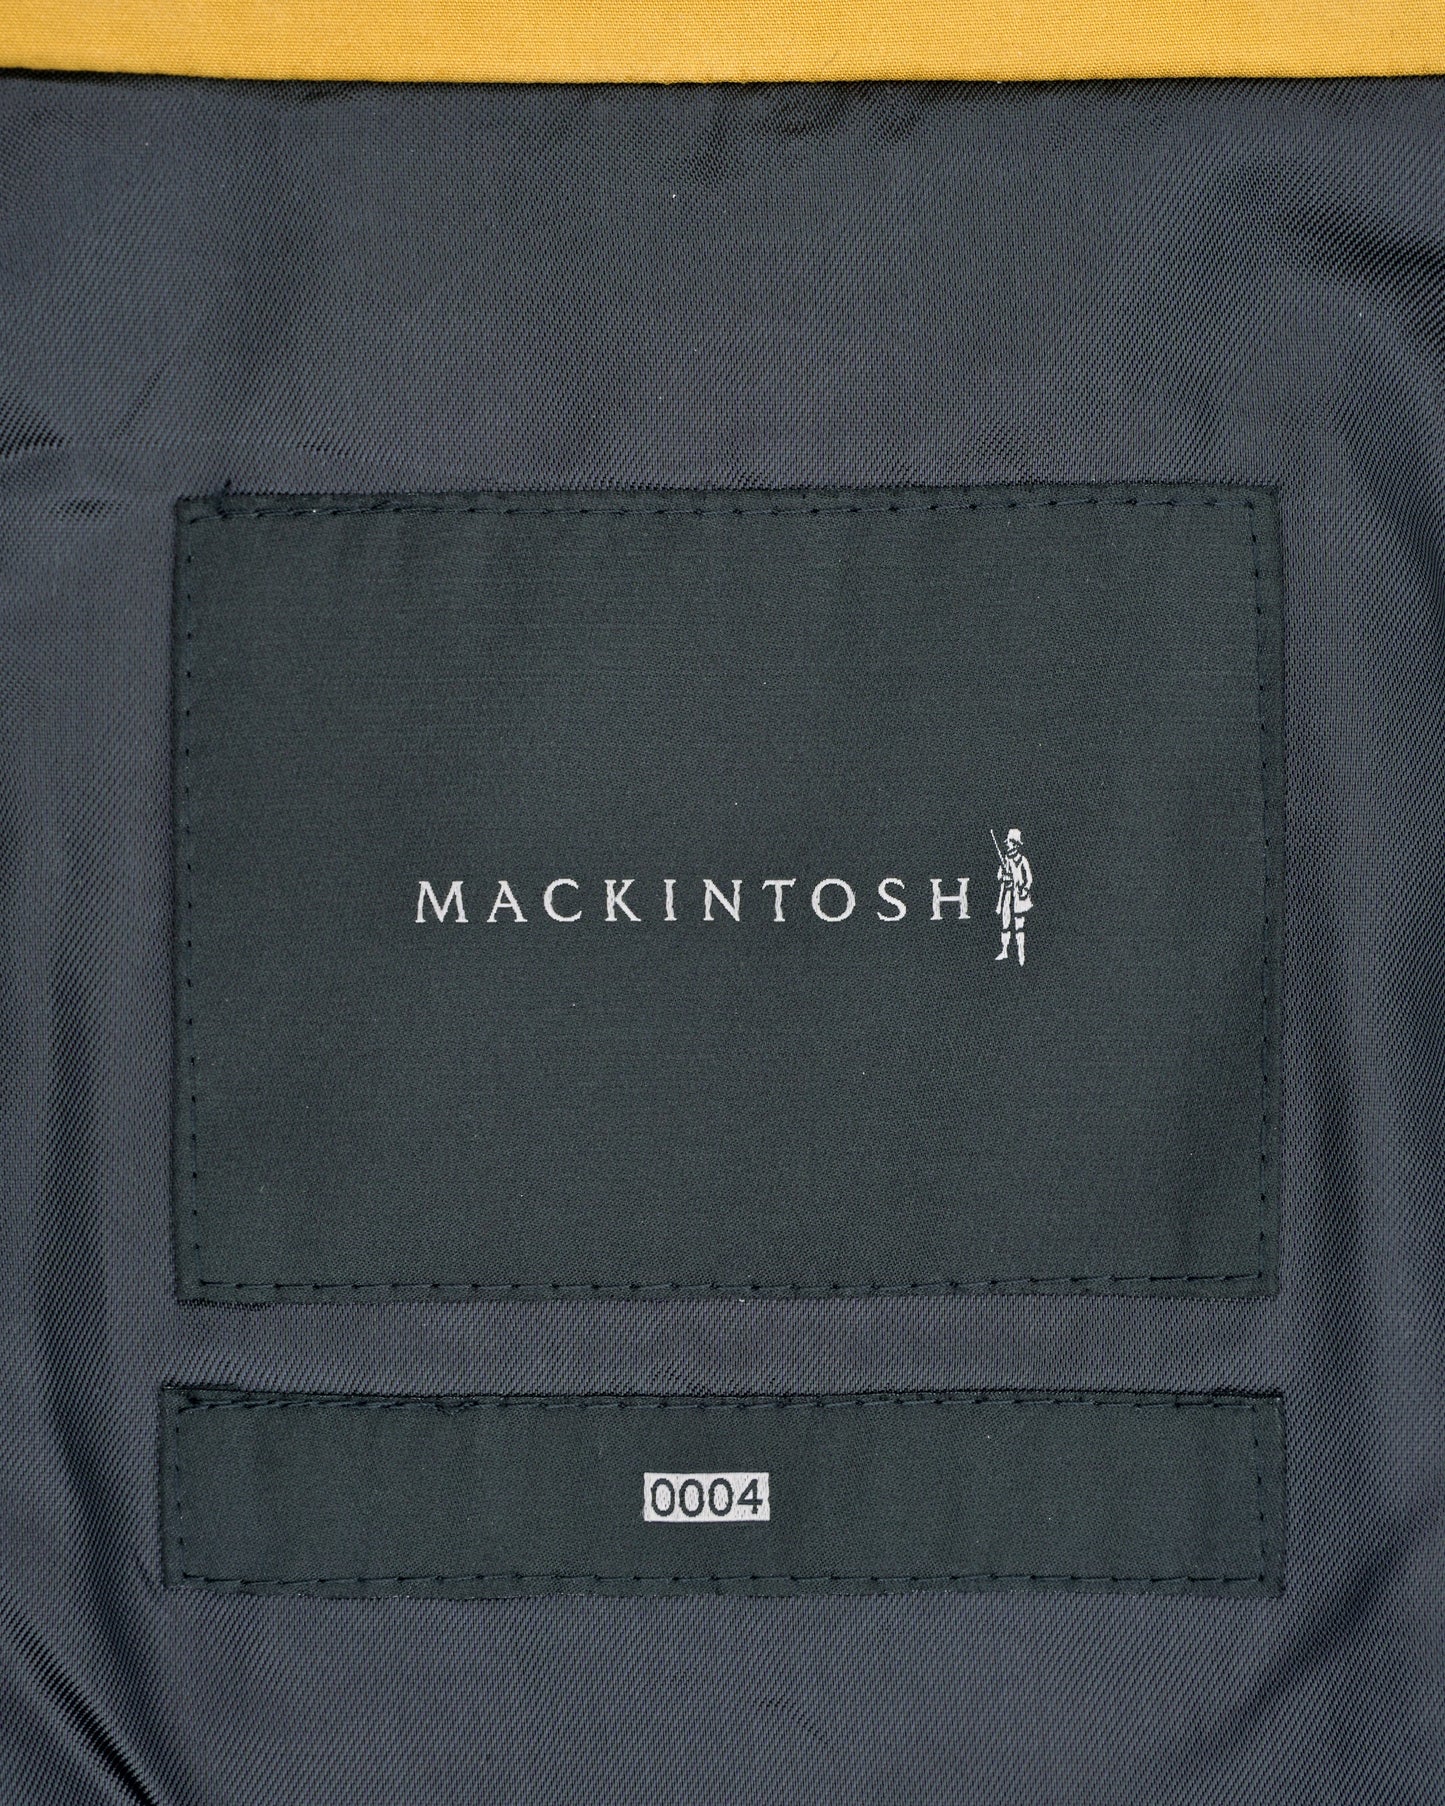 Mackintosh SS19 0004 Cropped Technical Jacket